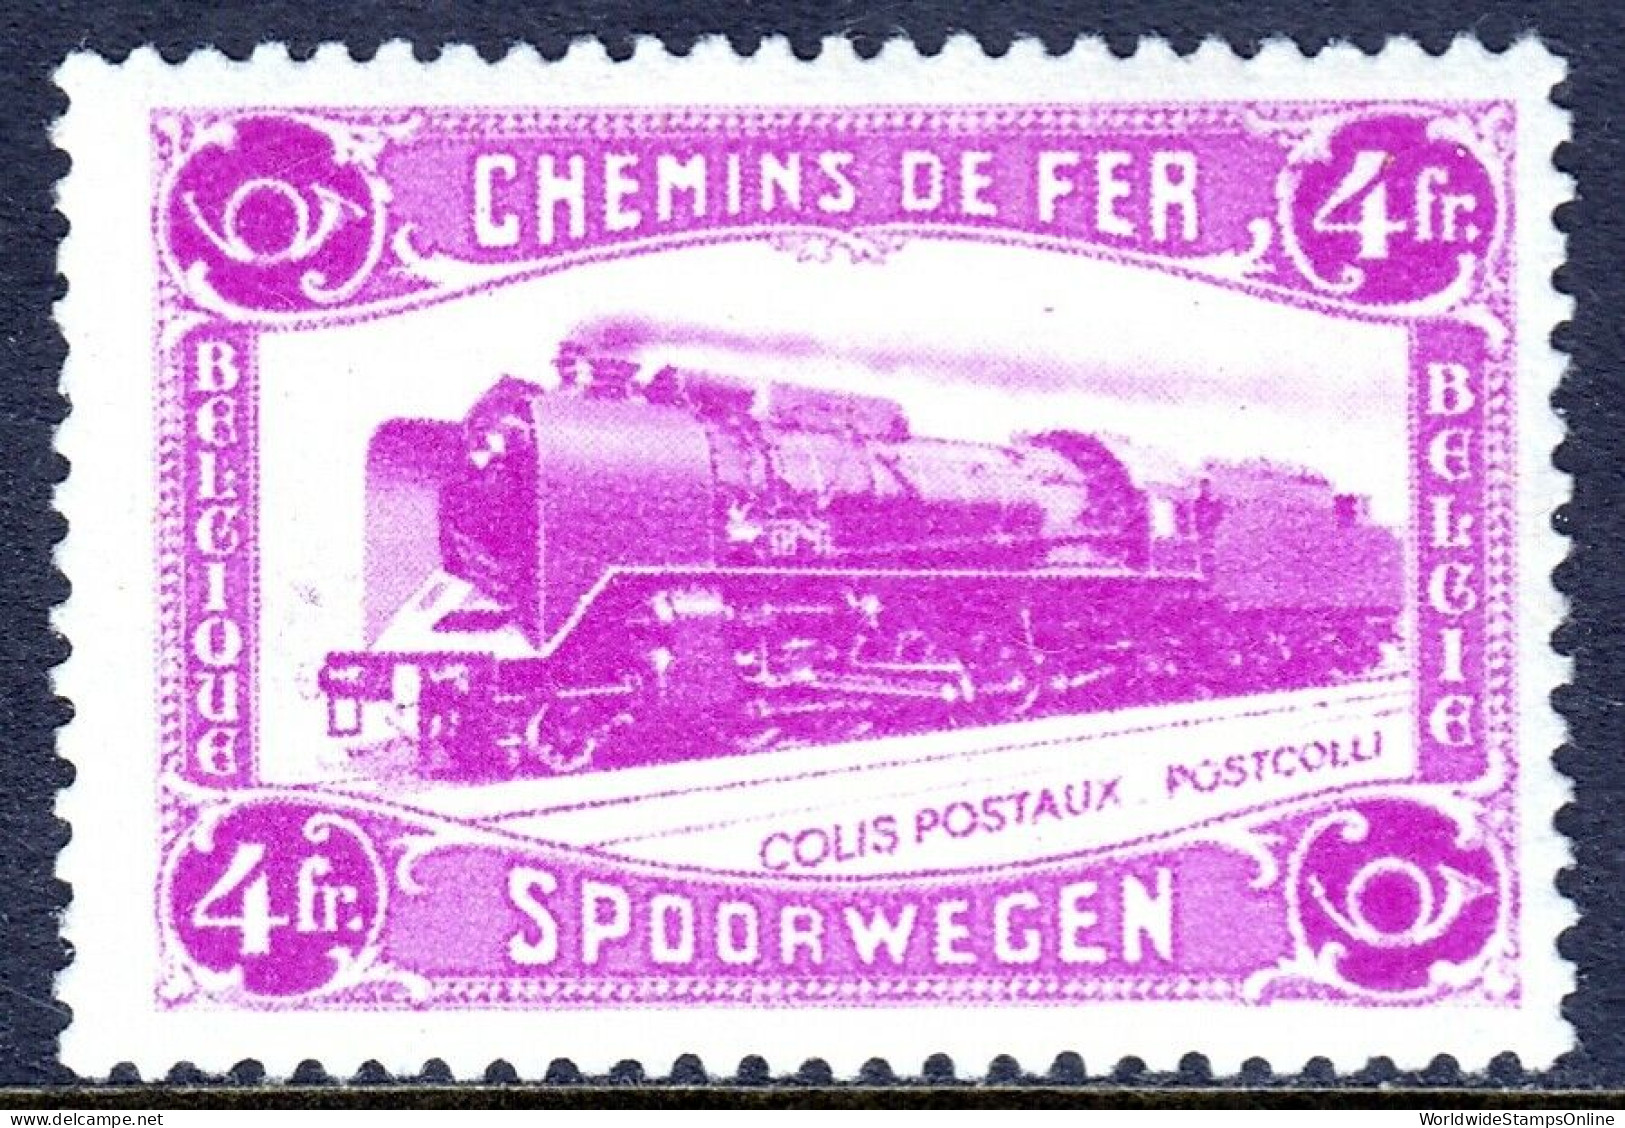 BELGIUM — SCOTT Q182 — 1934 4fr RAILWAY ISSUE — MH — SCV $9.50 - Mint